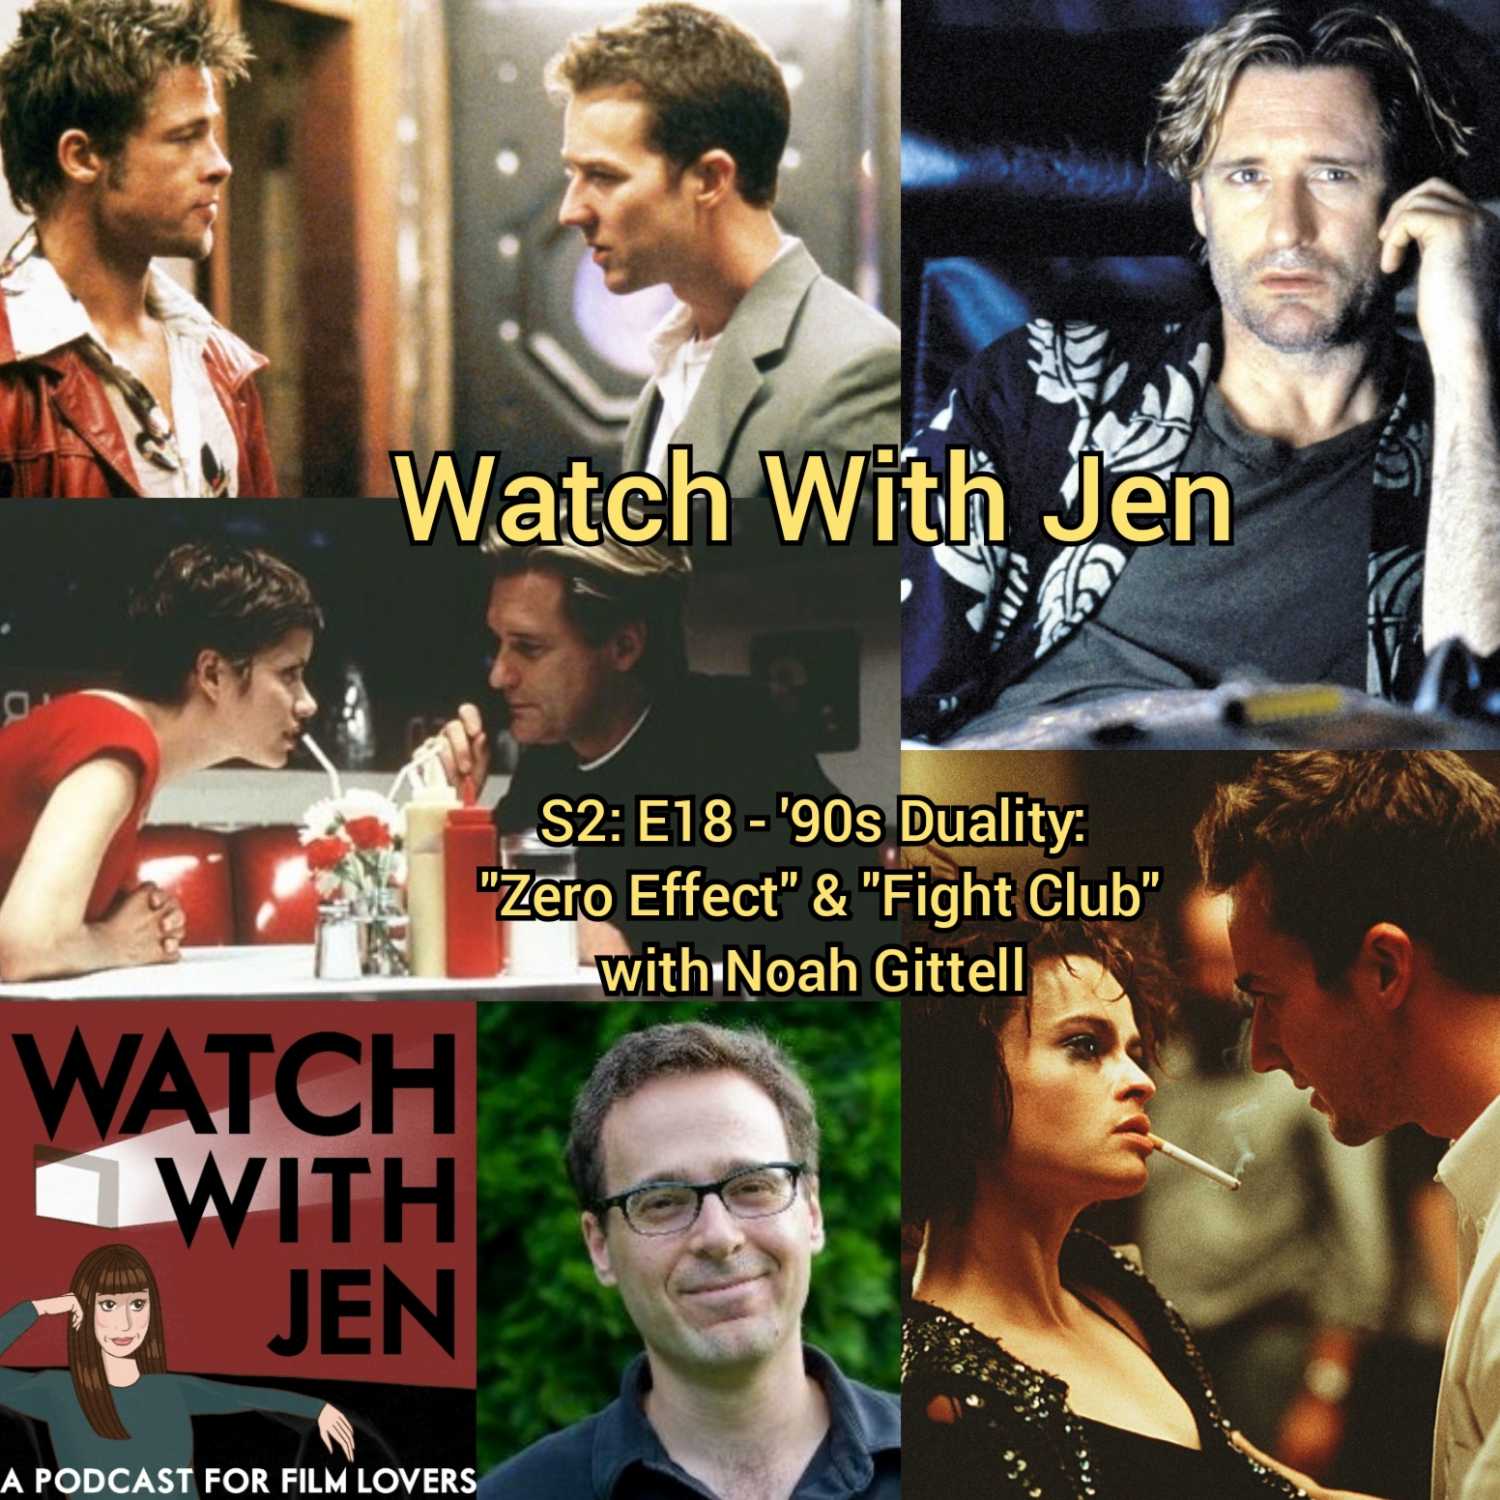 Watch With Jen - S2: E18 - ’90s Duality: ”Zero Effect” & ”Fight Club” with Noah Gittell